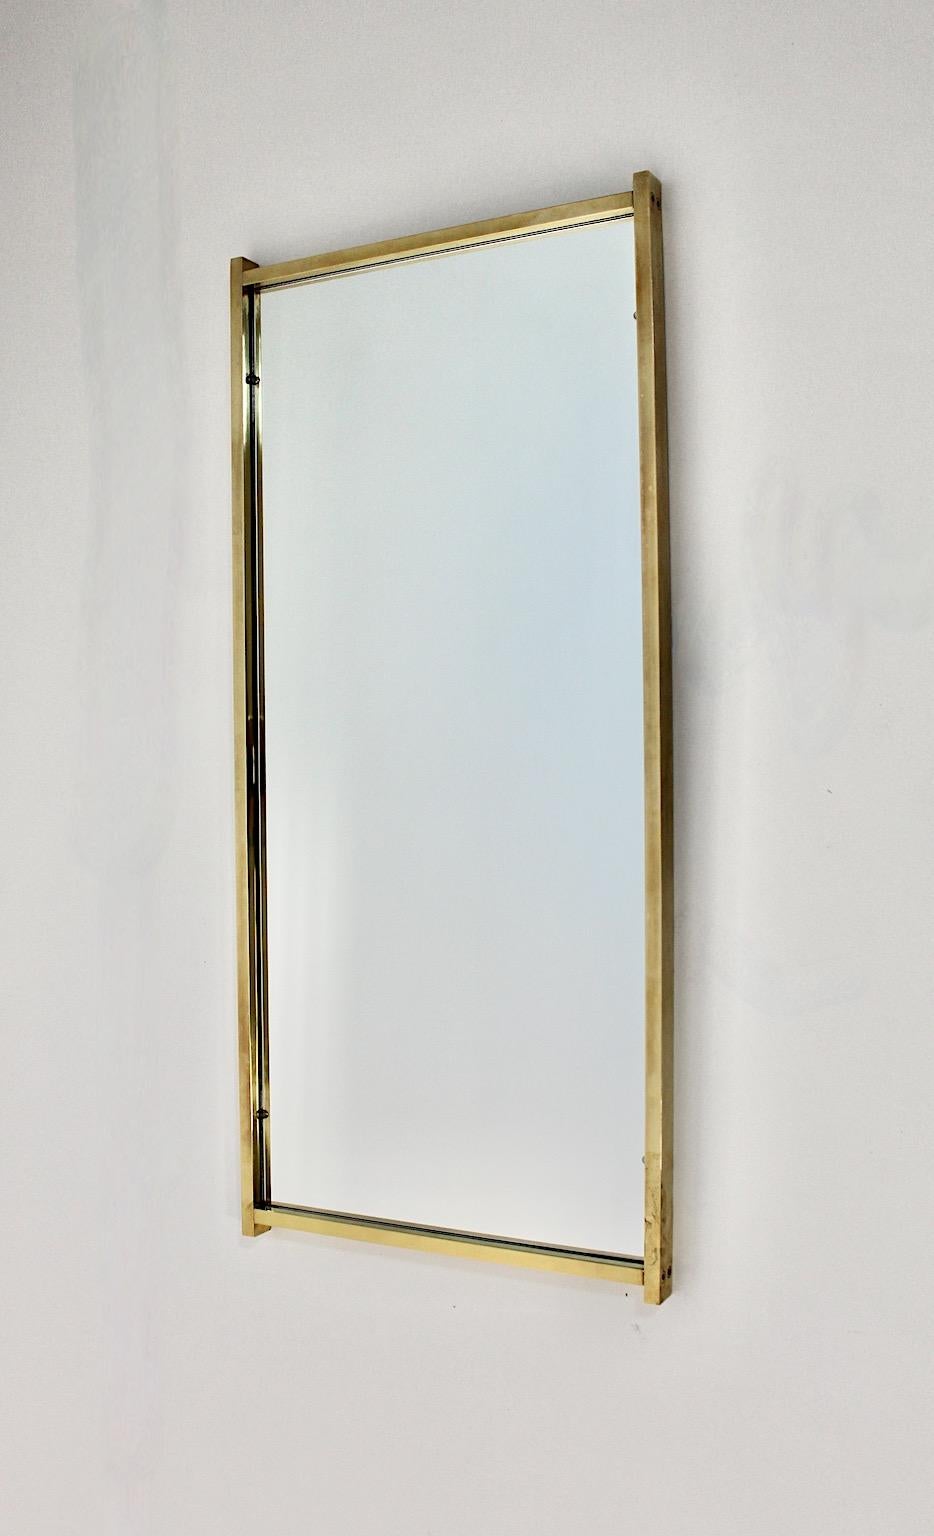 Modernist Vintage Rectangular Brass Wall Mirror Floor Mirror 1970s Italy For Sale 2